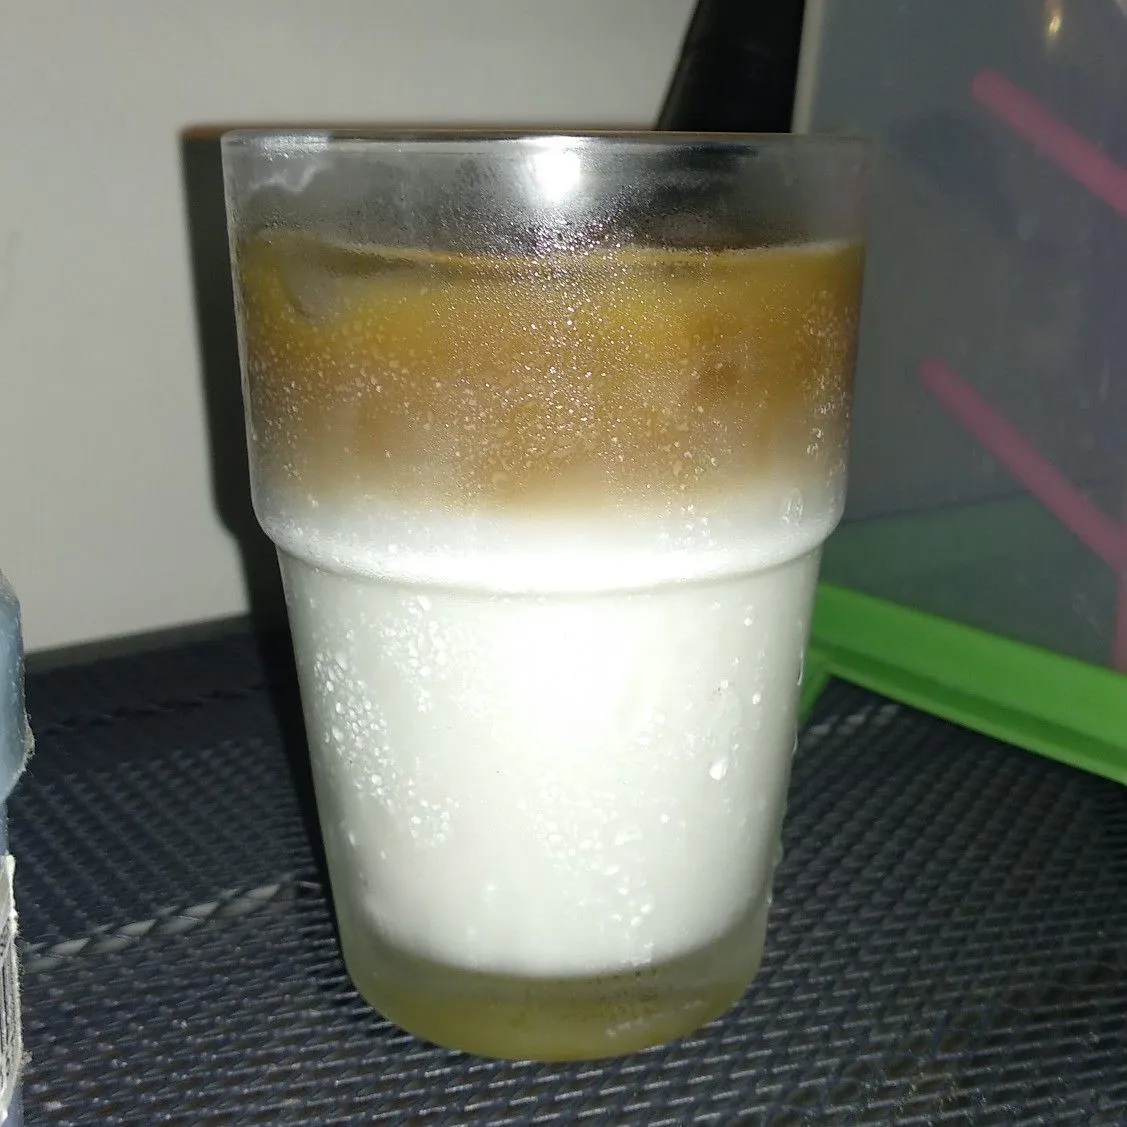 Iced Caramel Latte